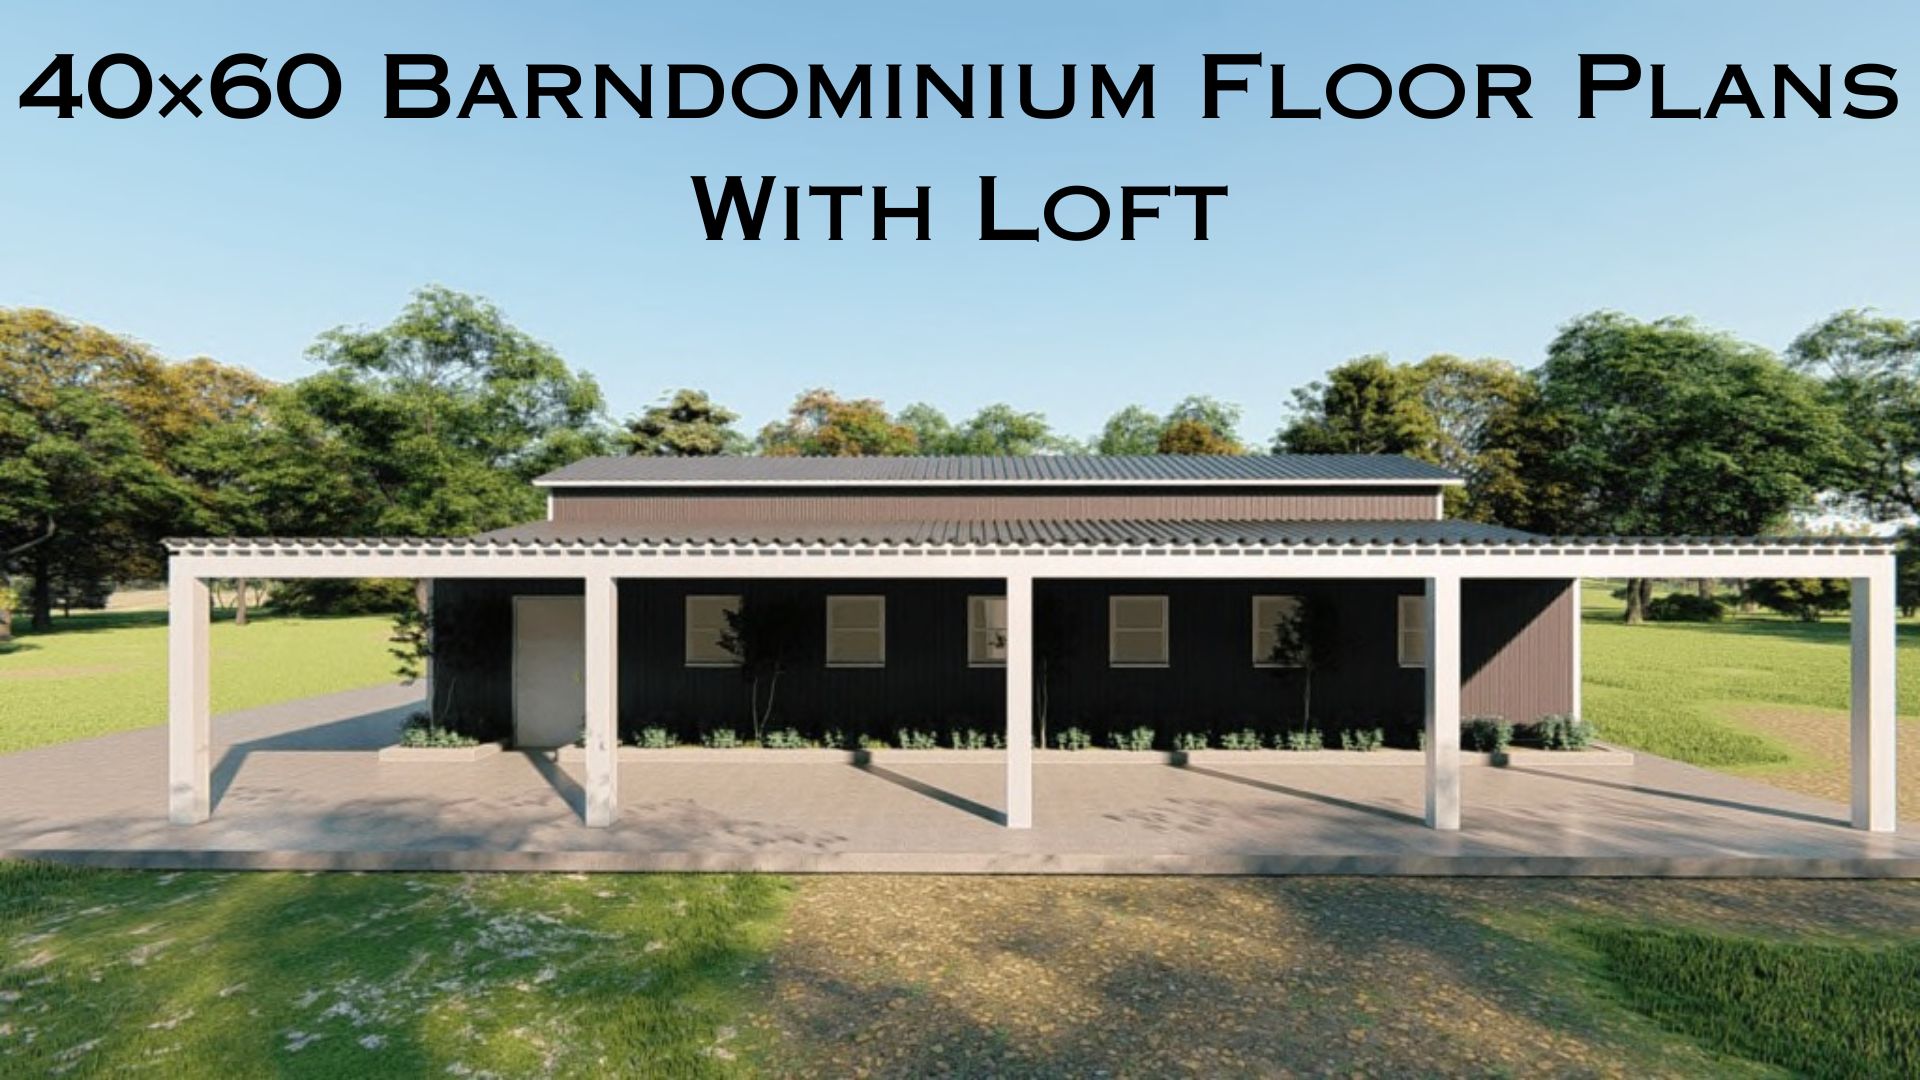 10 Customized 40×60 Barndominium Floor Plans With Loft